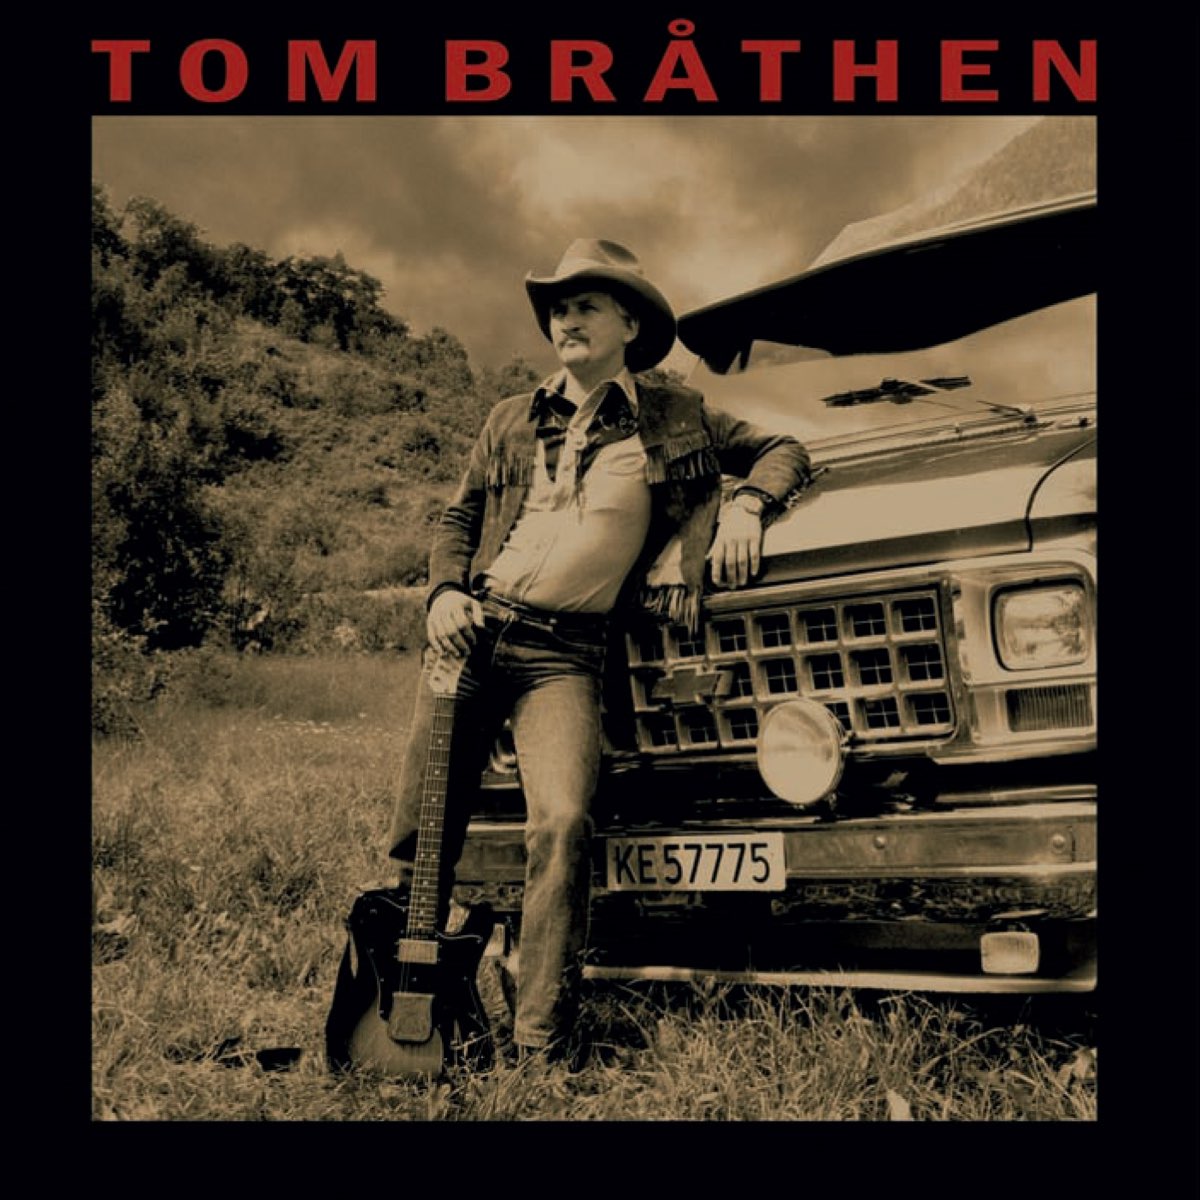 Tom Bråthen - Album by Tom Bråthen - Apple Music